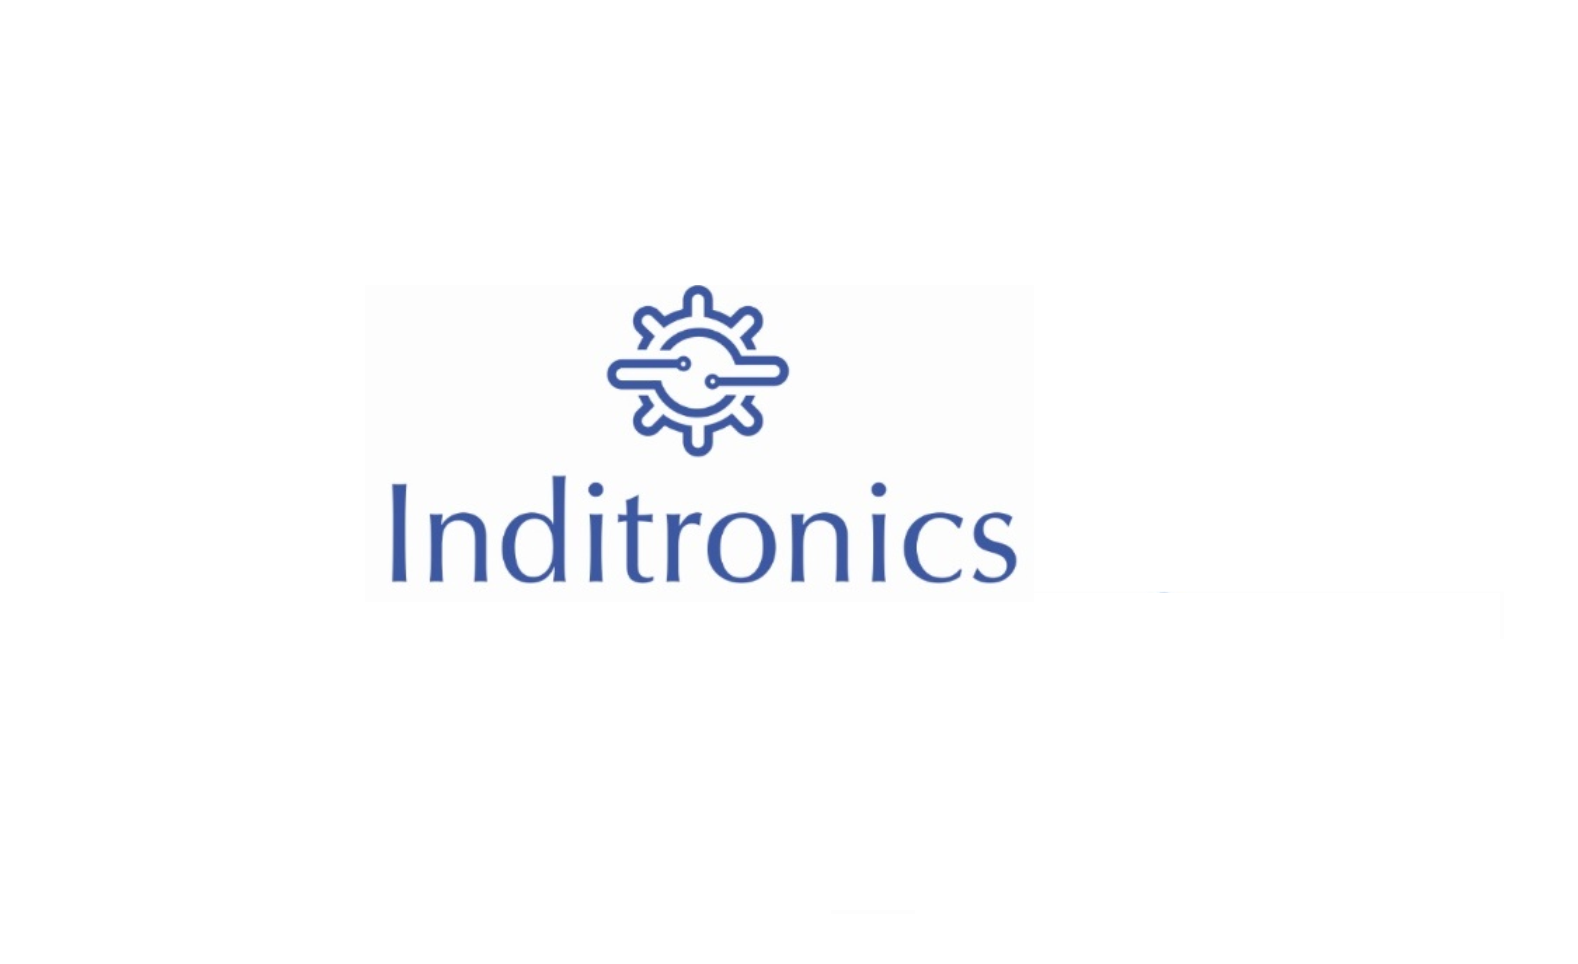 Inditronics Pvt Ltd profile on Qualified.One